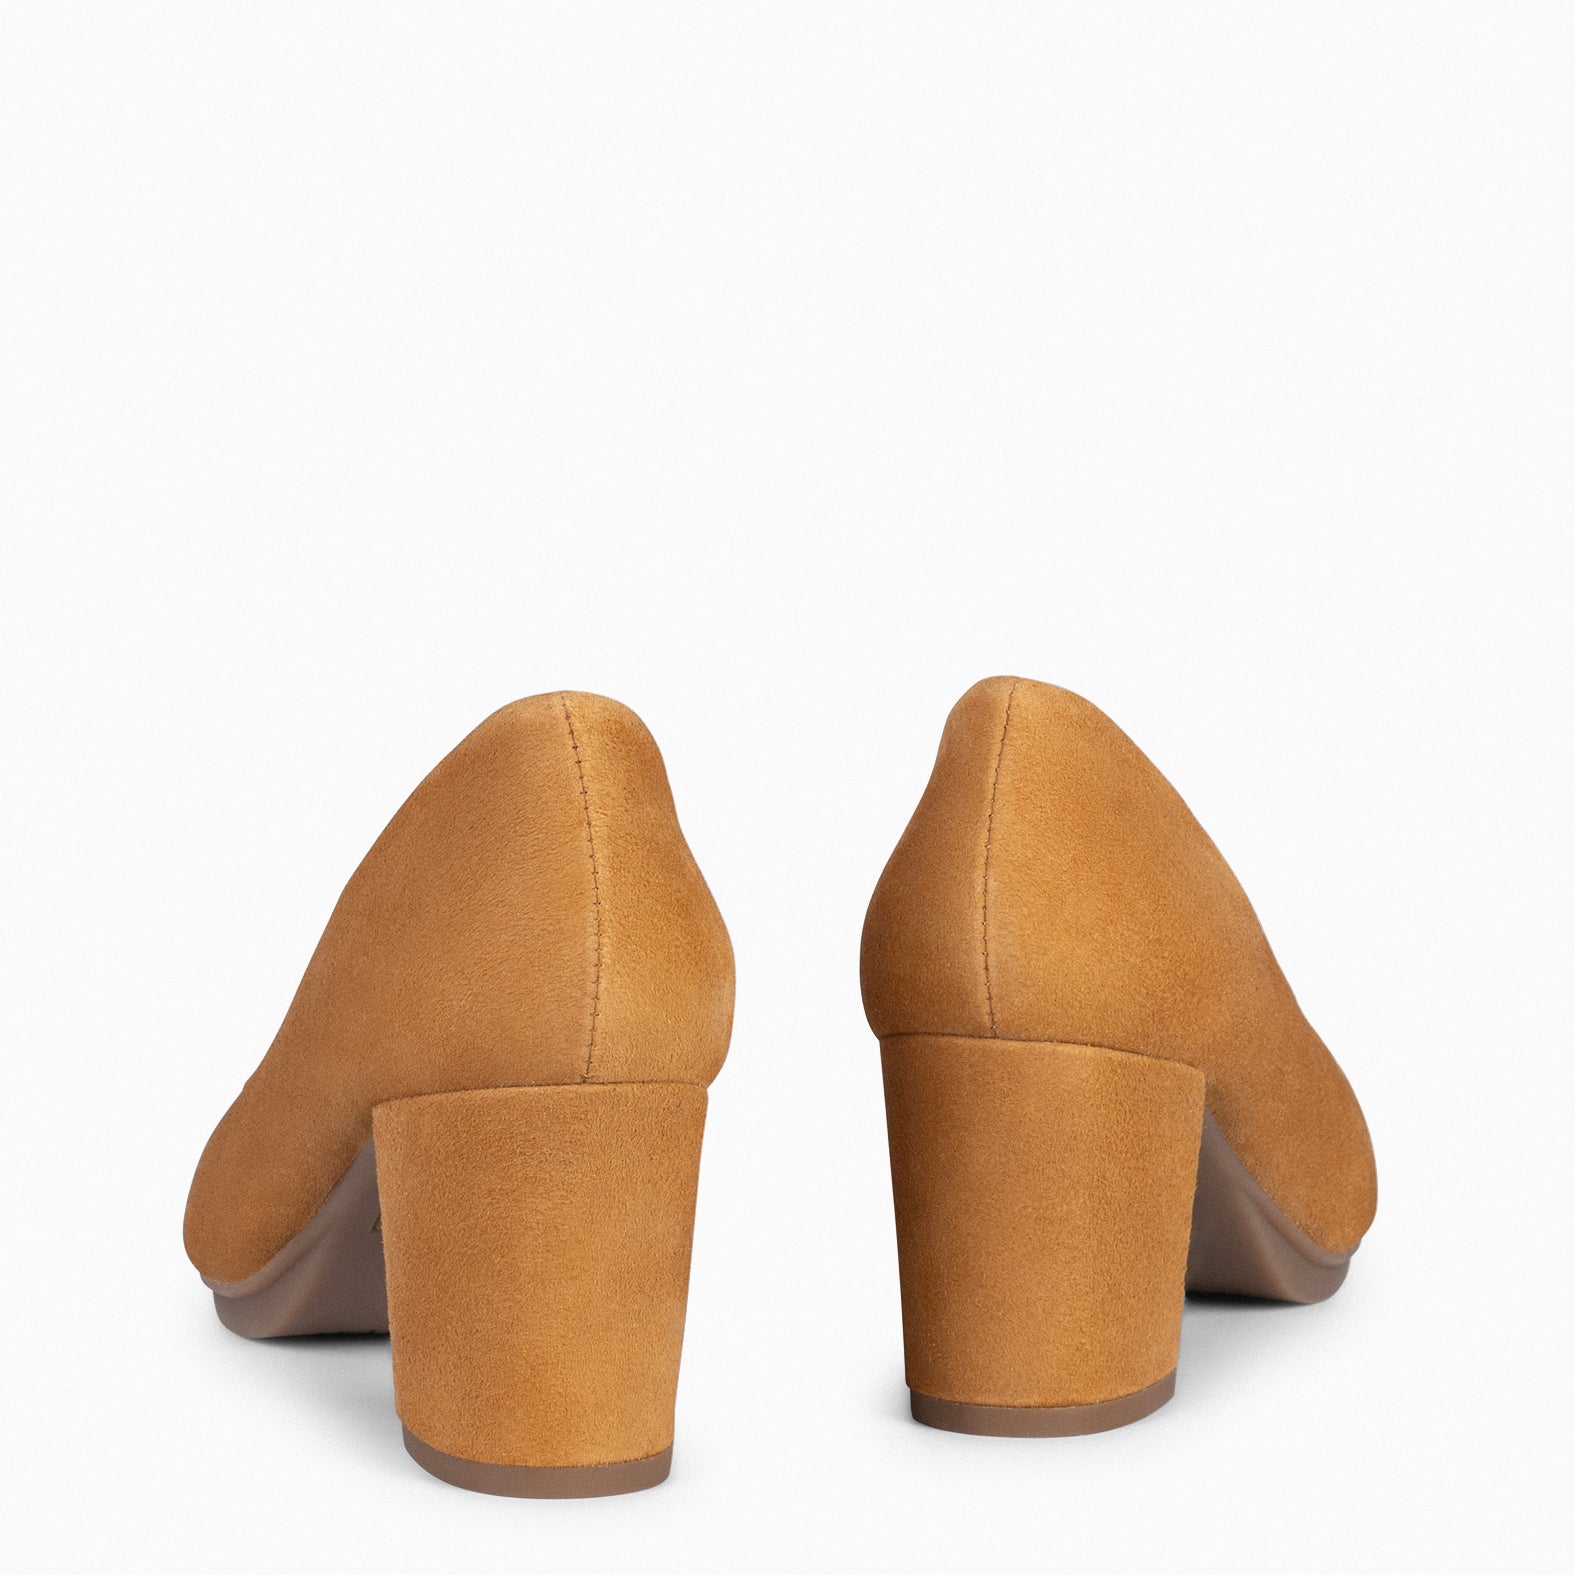 Buy Flat n Heels Womens Brown Lace-Up Block Heel Sandals at Amazon.in